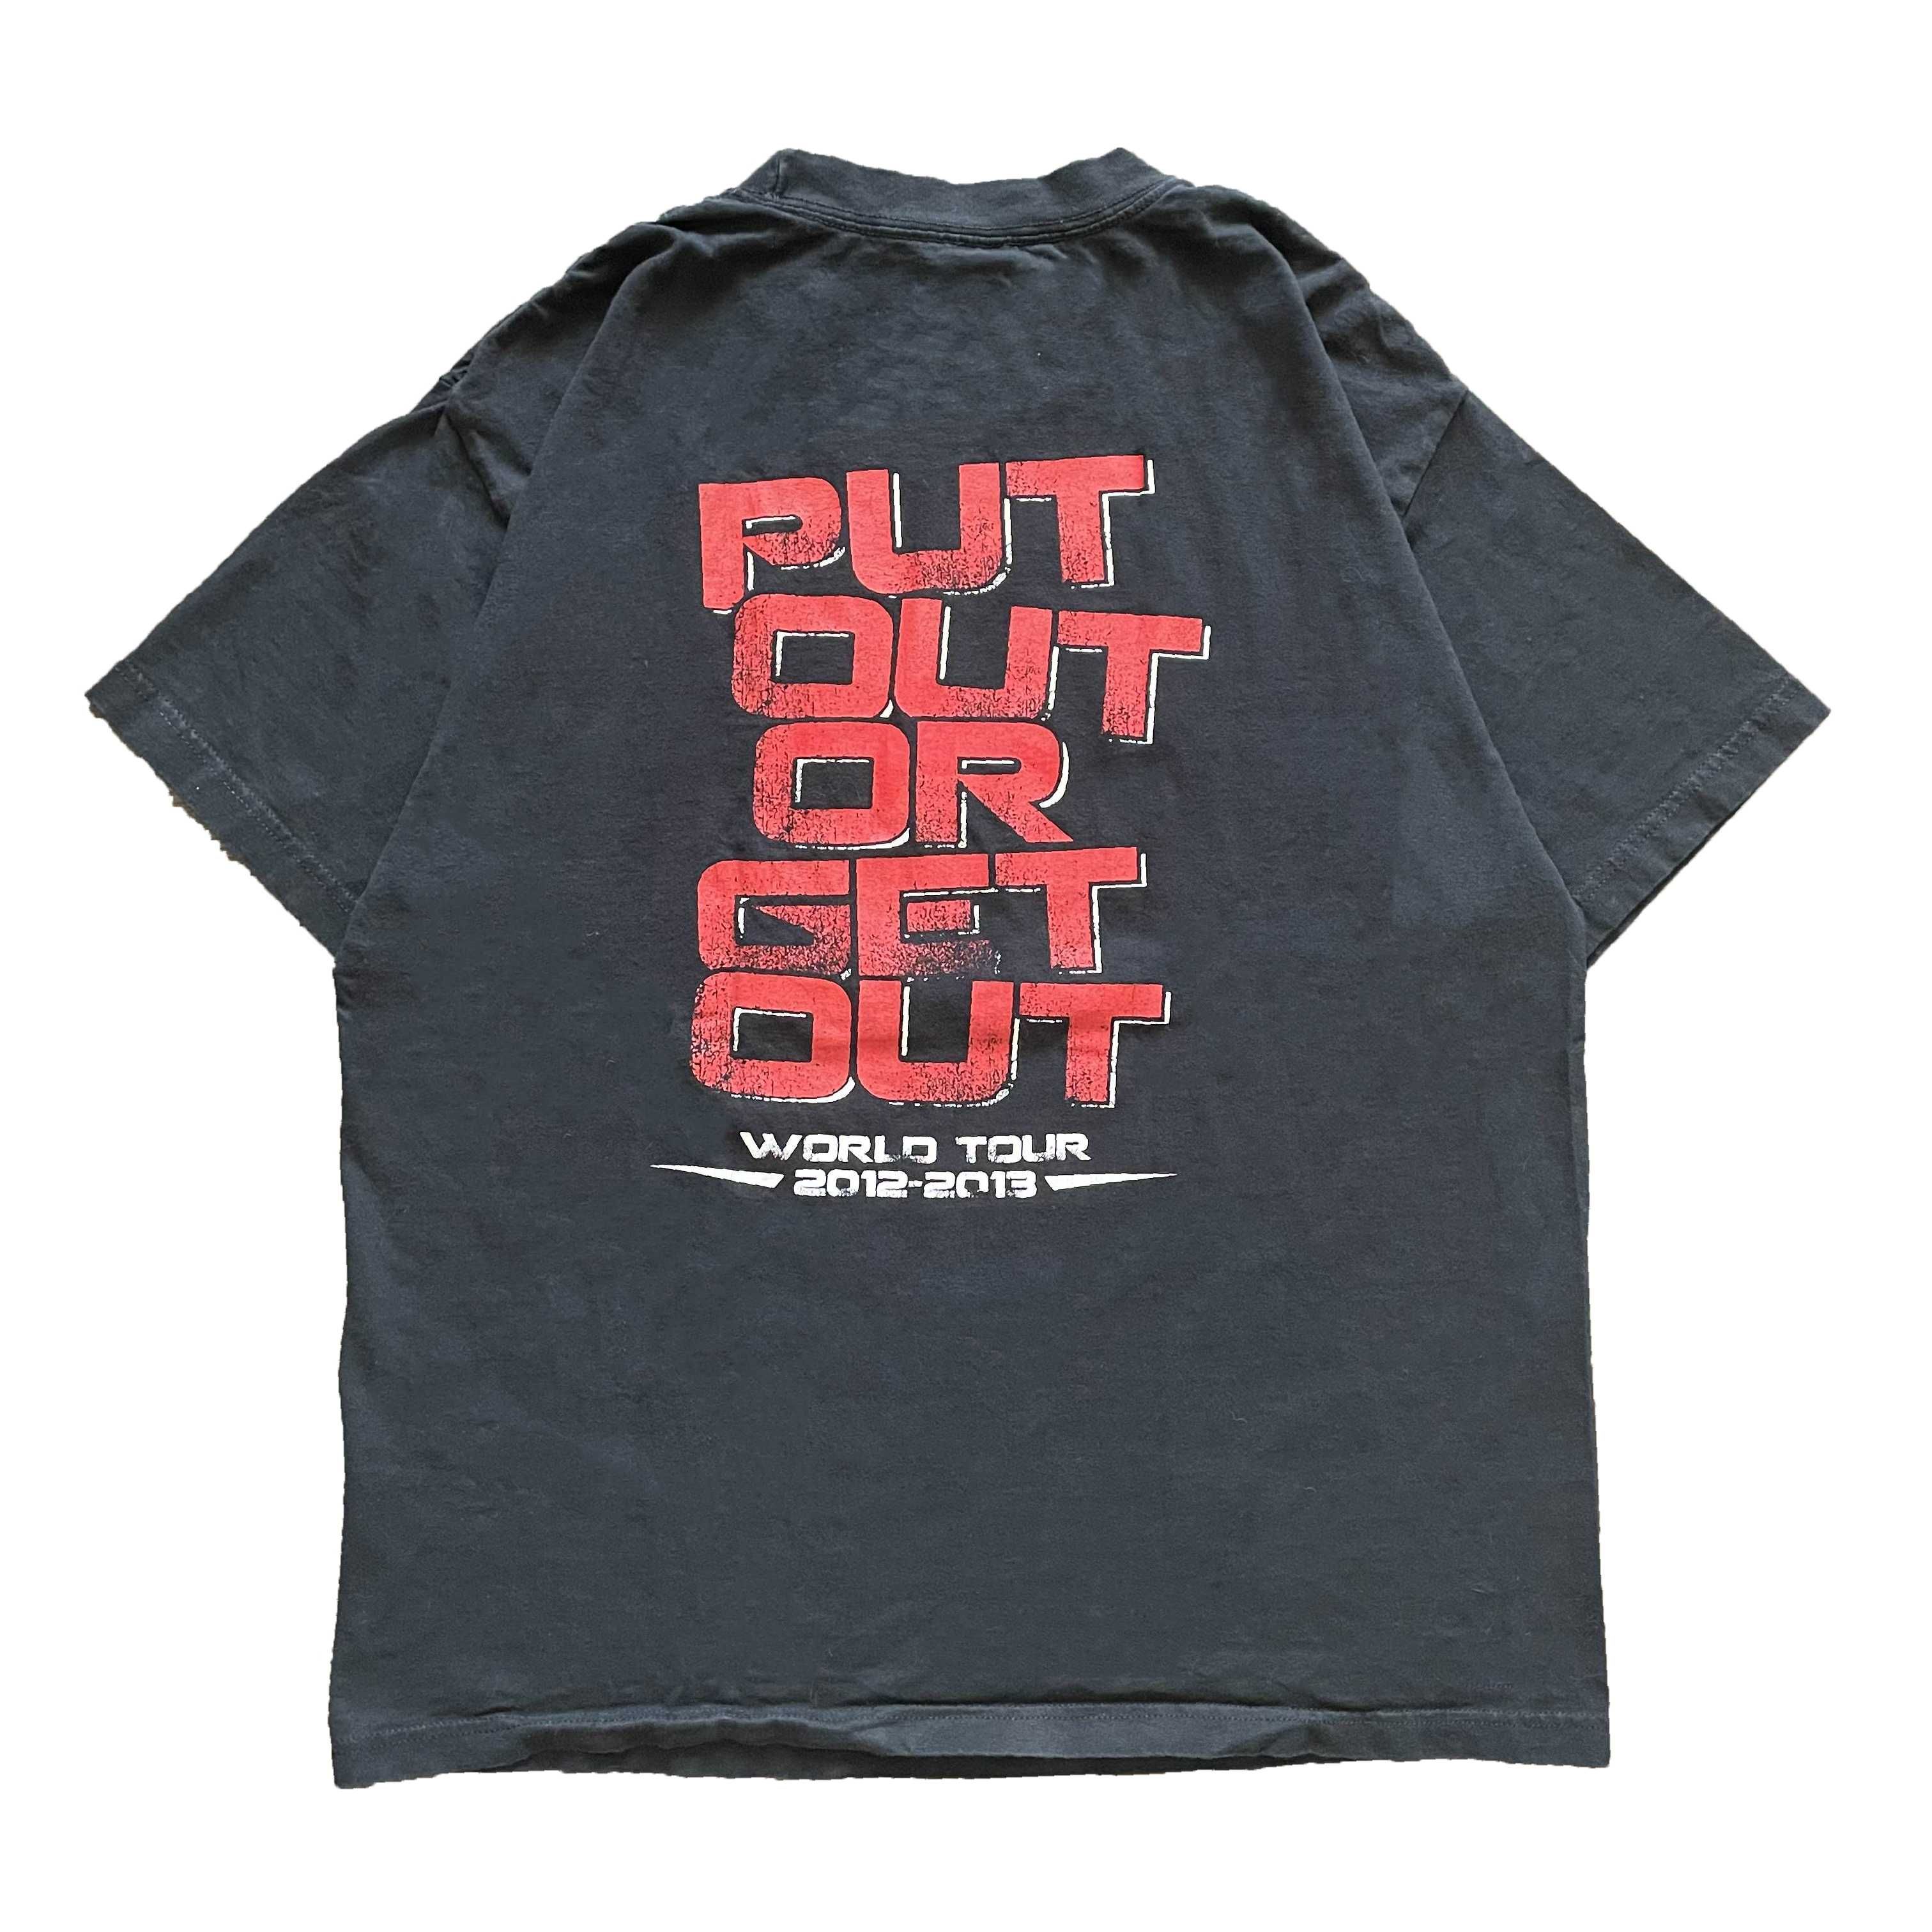 Tuff 2012 tour merch | tshirt koszulka футболка vintage skate y2k